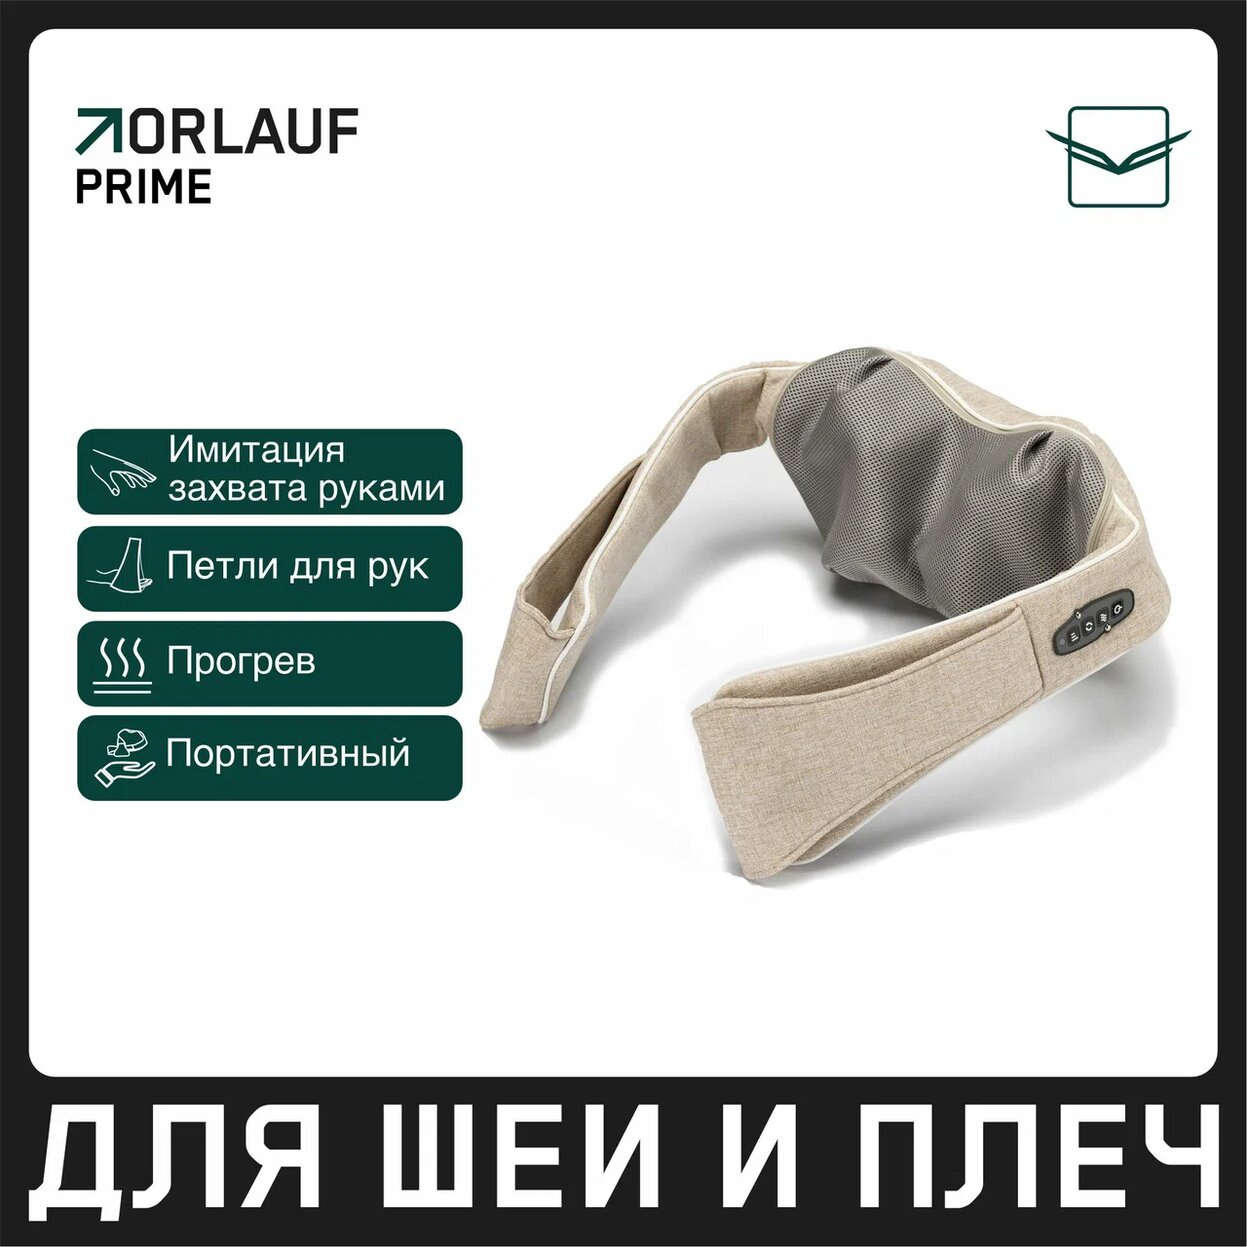 Orlauf Prime из каталога устройств для массажа в Волгограде по цене 11900 ₽